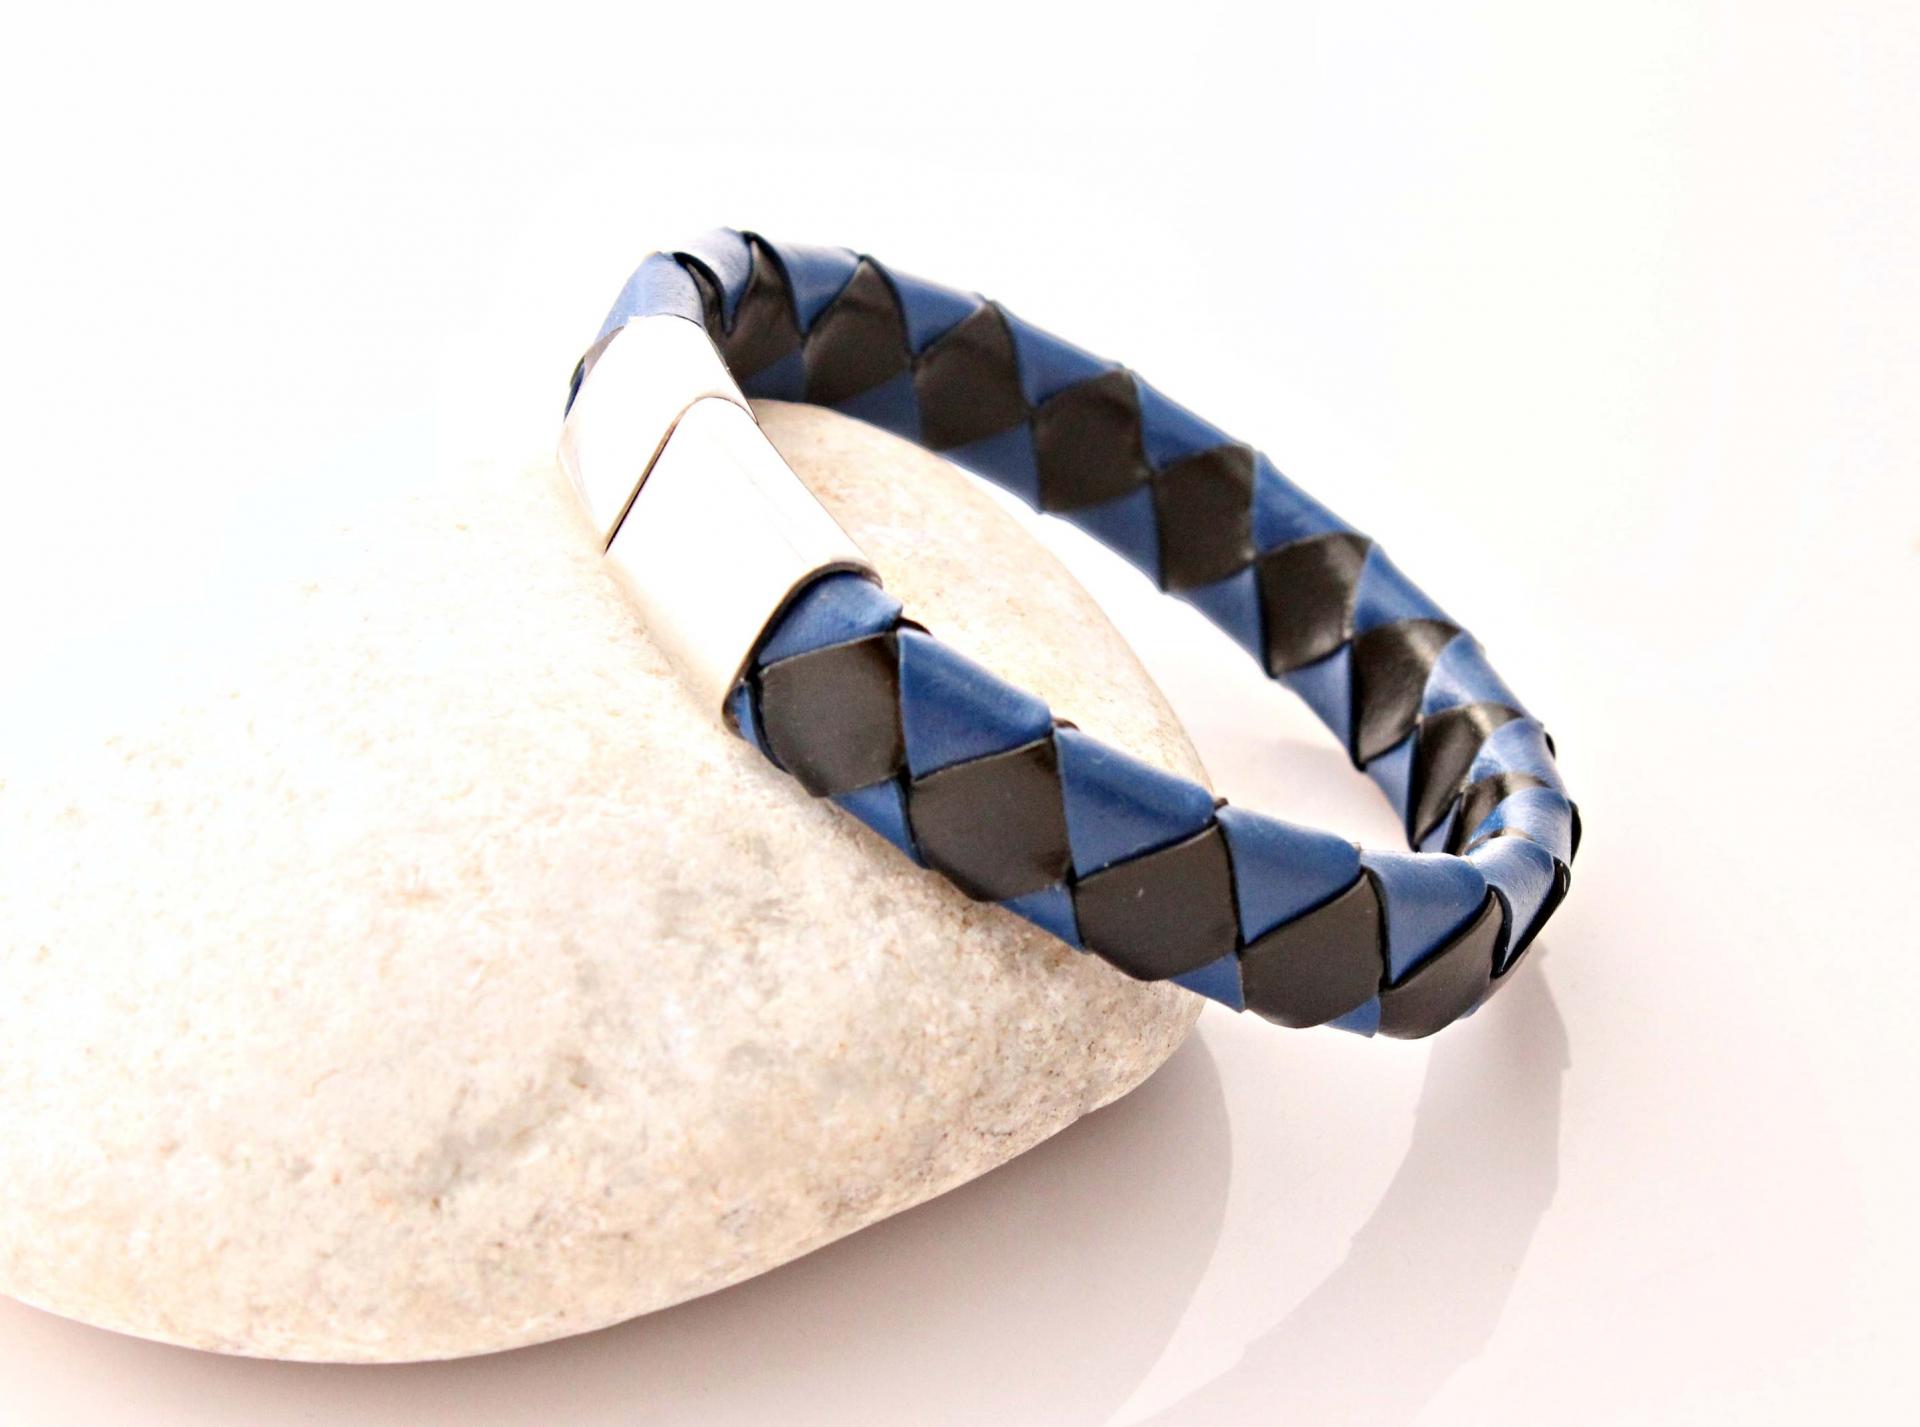 Diamond Checkers Bracelet - Black 'n Blue - Customisable